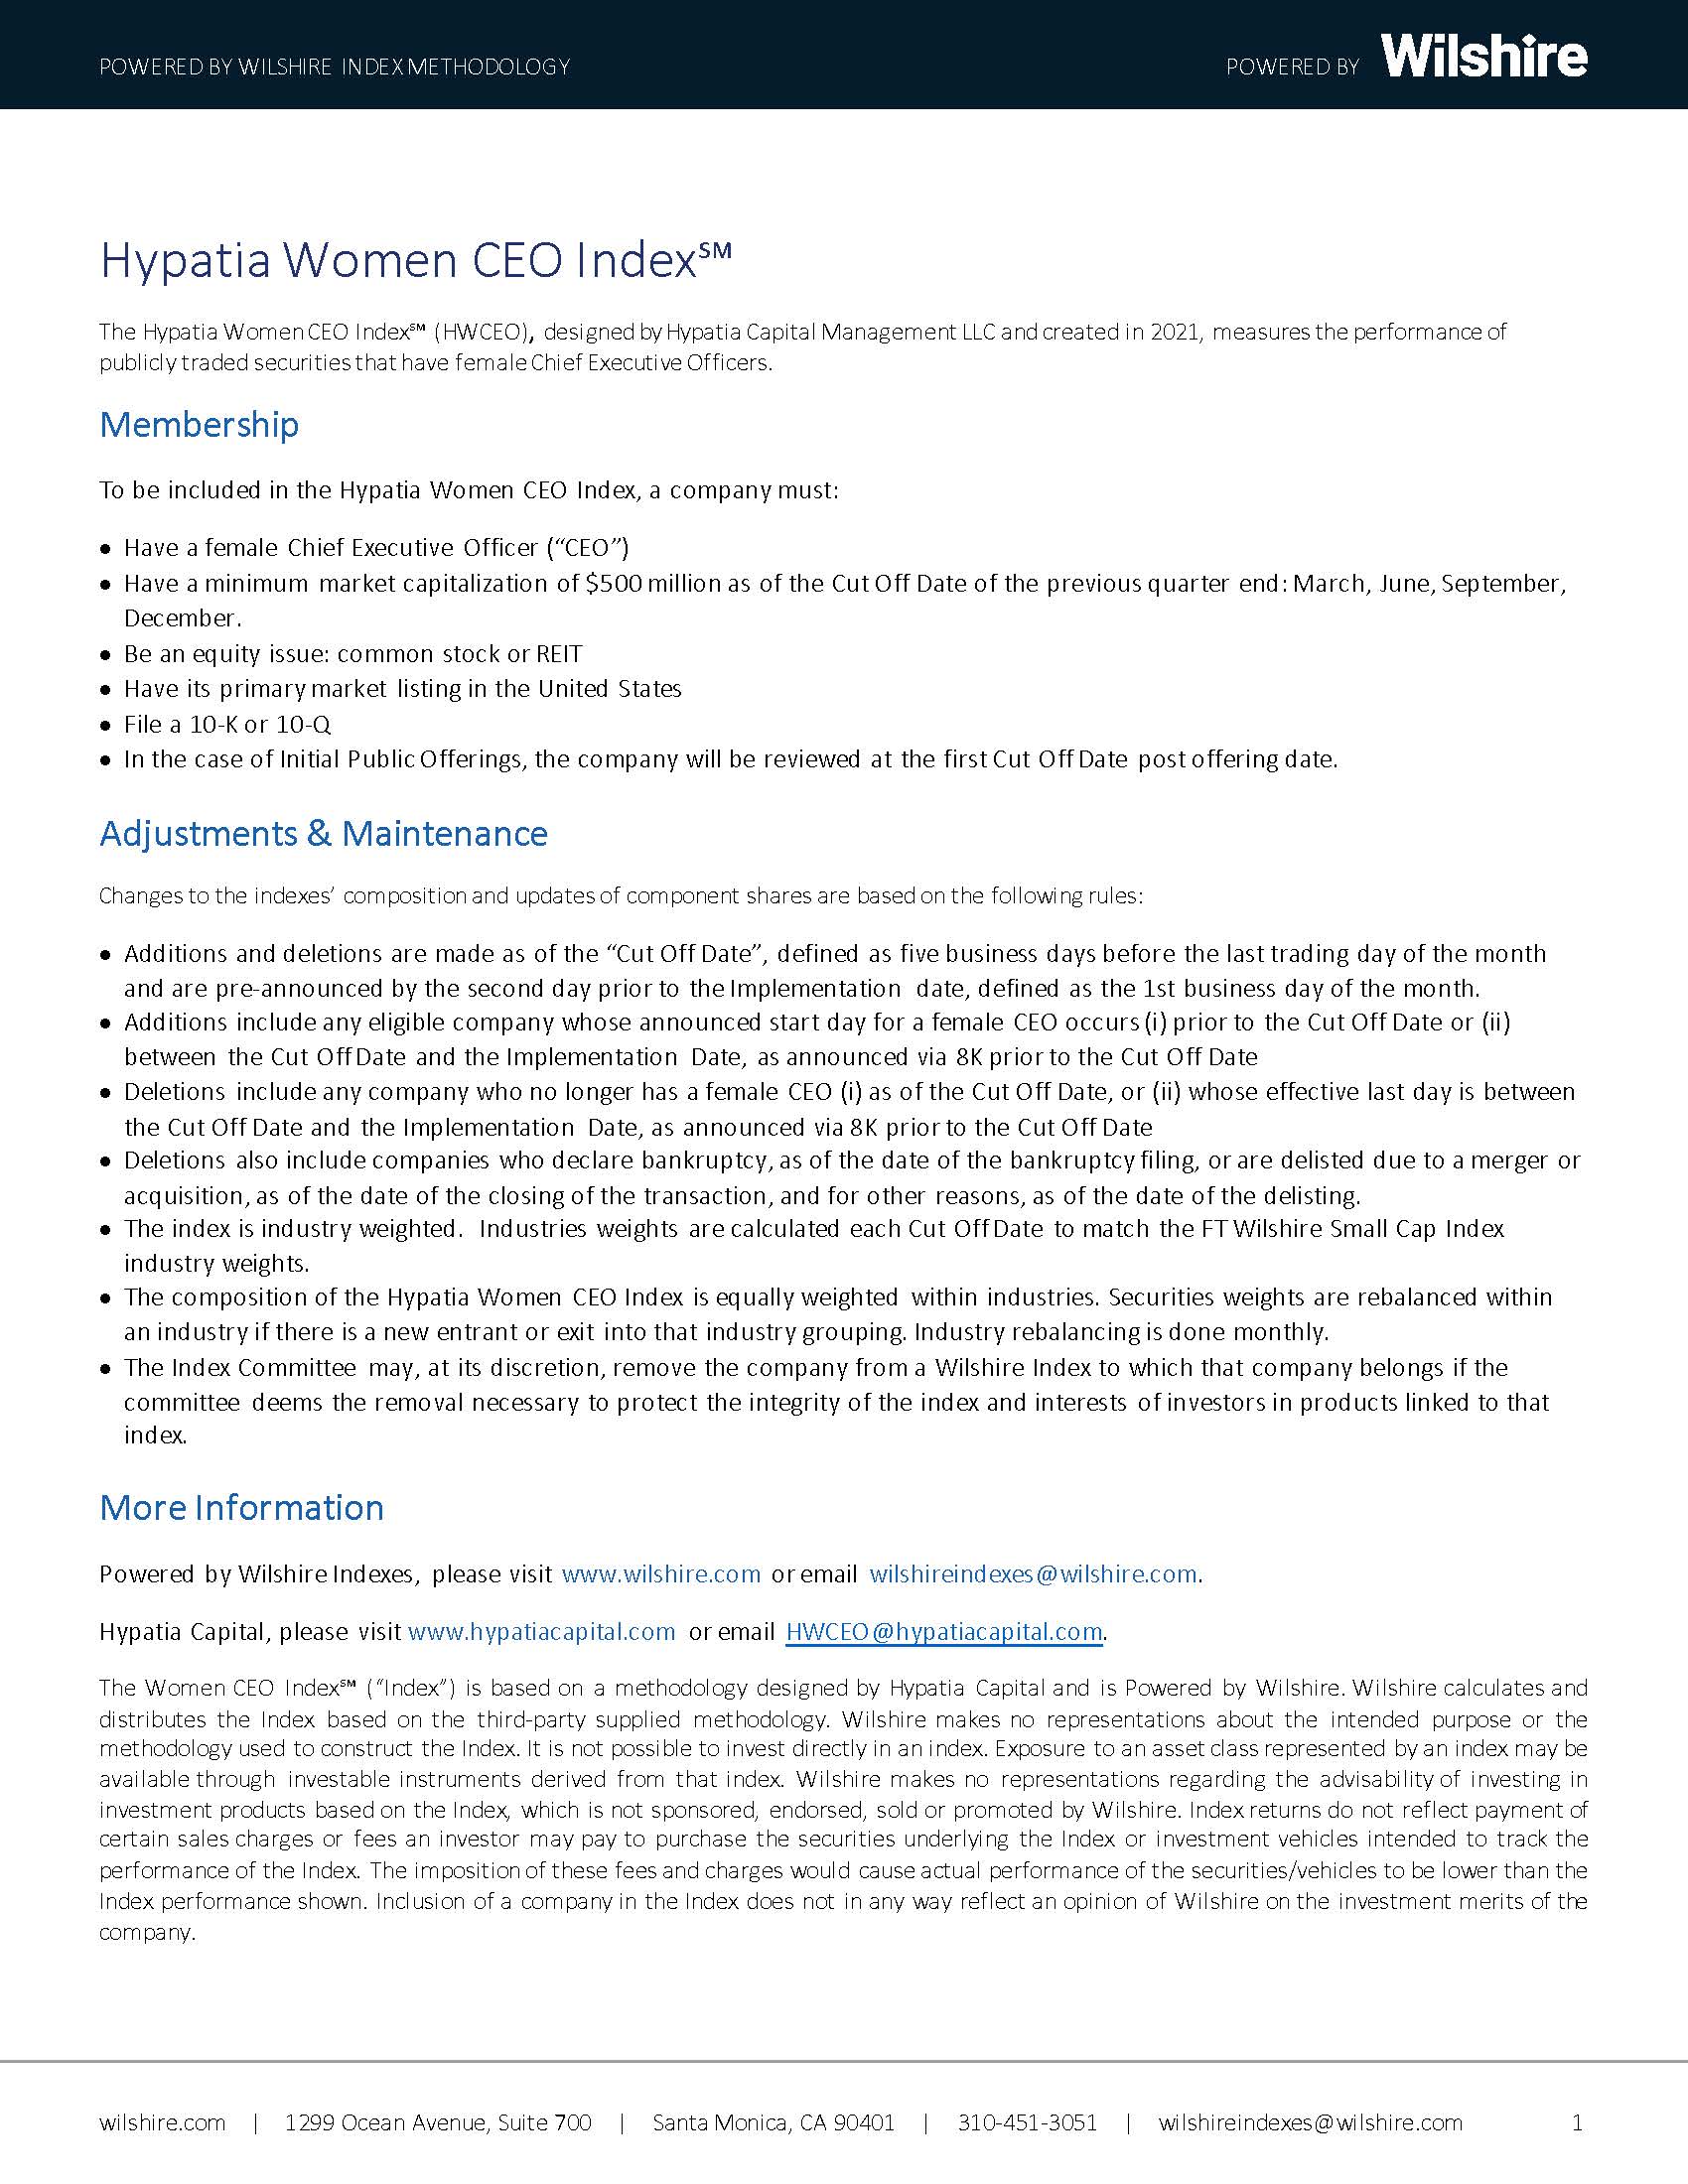 Hypatia Women CEO Index Methodology_Page_1